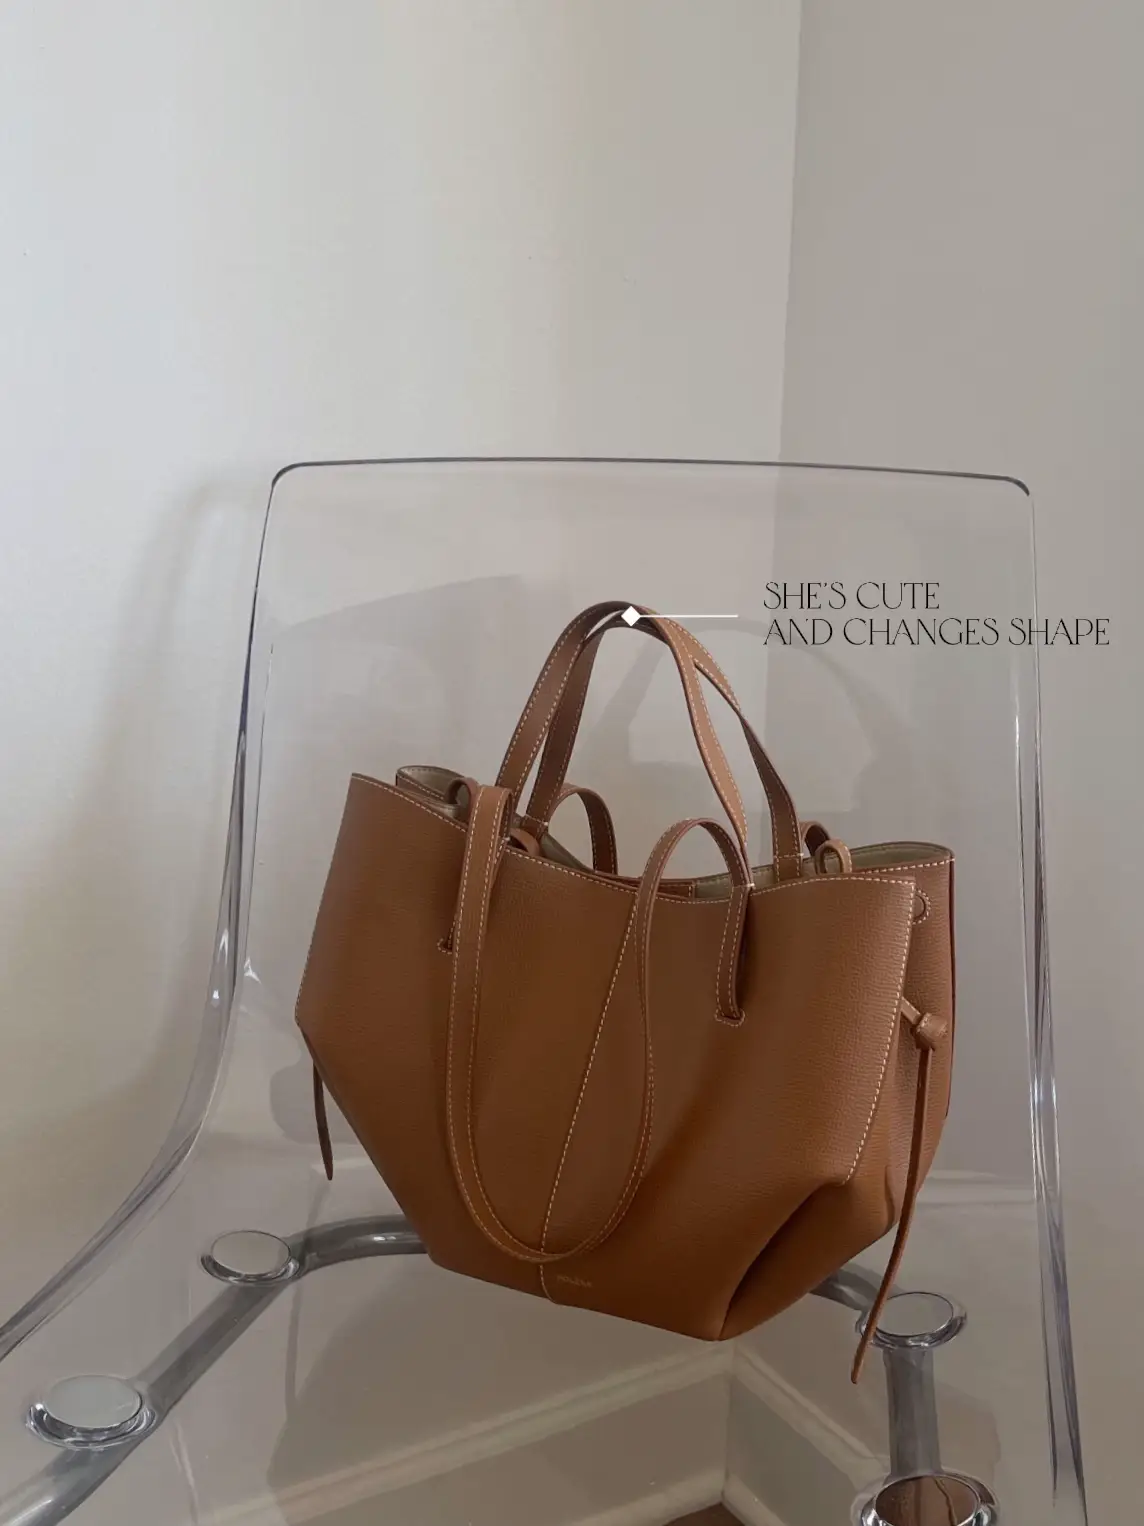 Polène | Bag - Cyme - Taupe Textured Leather